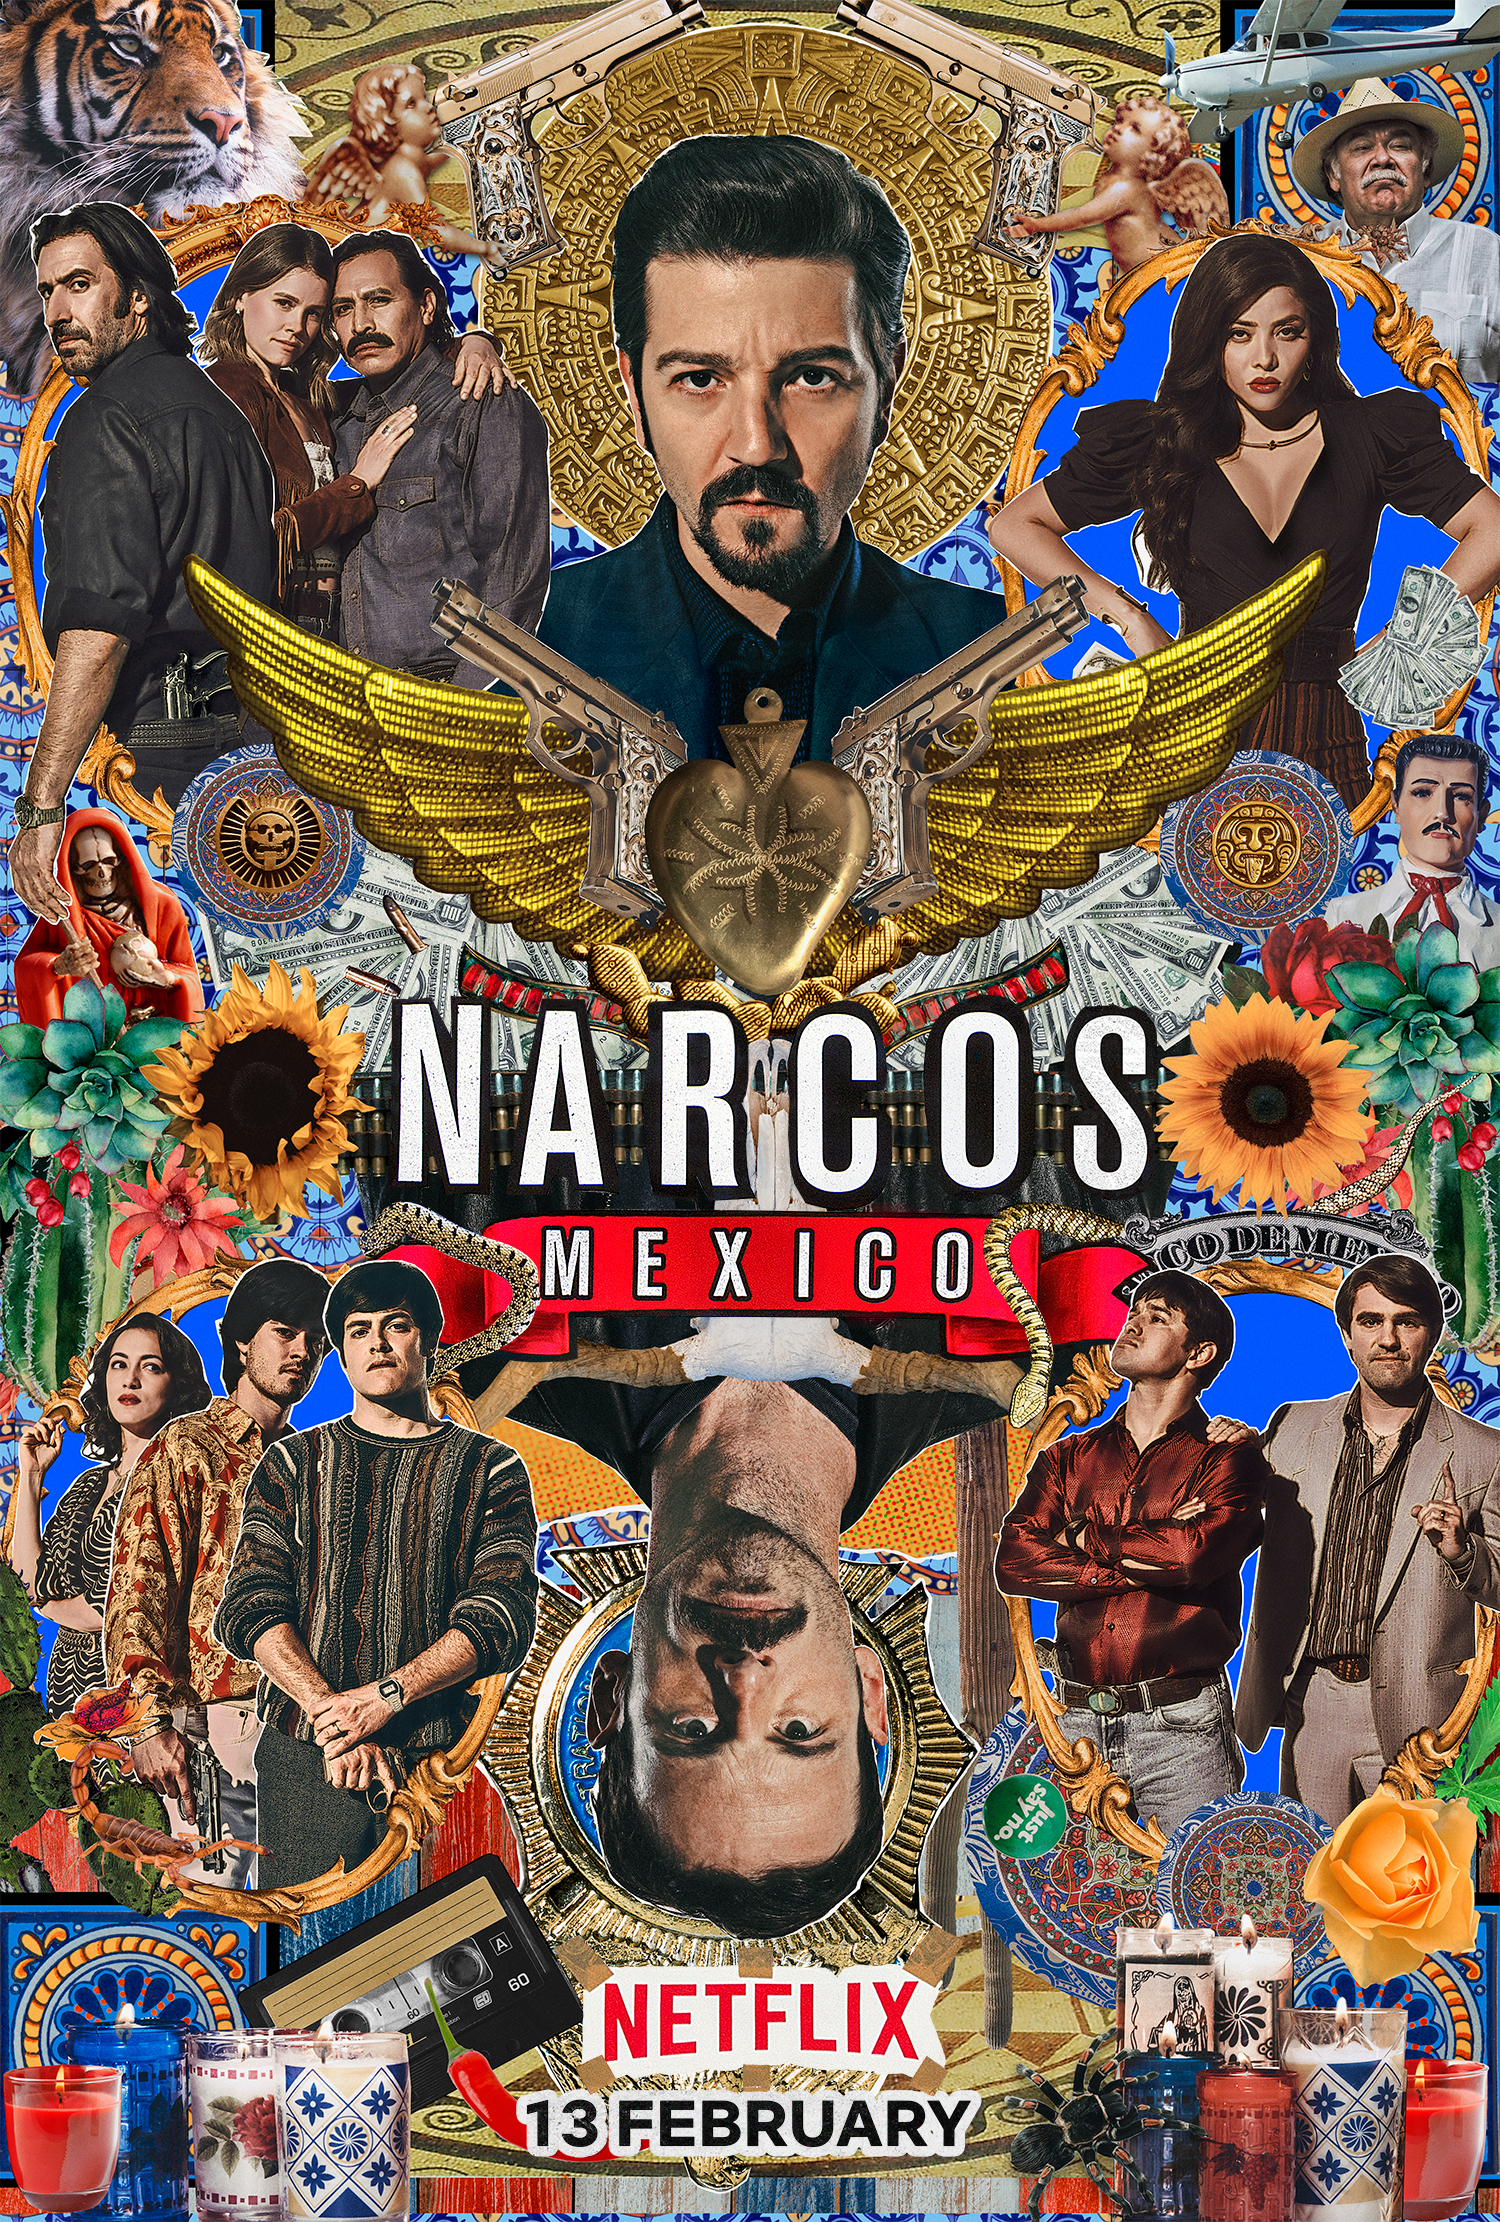 Stiahni si Seriál Narcos: Mexiko / Narcos: Mexico S02E01 (CZ)[TvRip][1080p][HEVC] = CSFD 86%